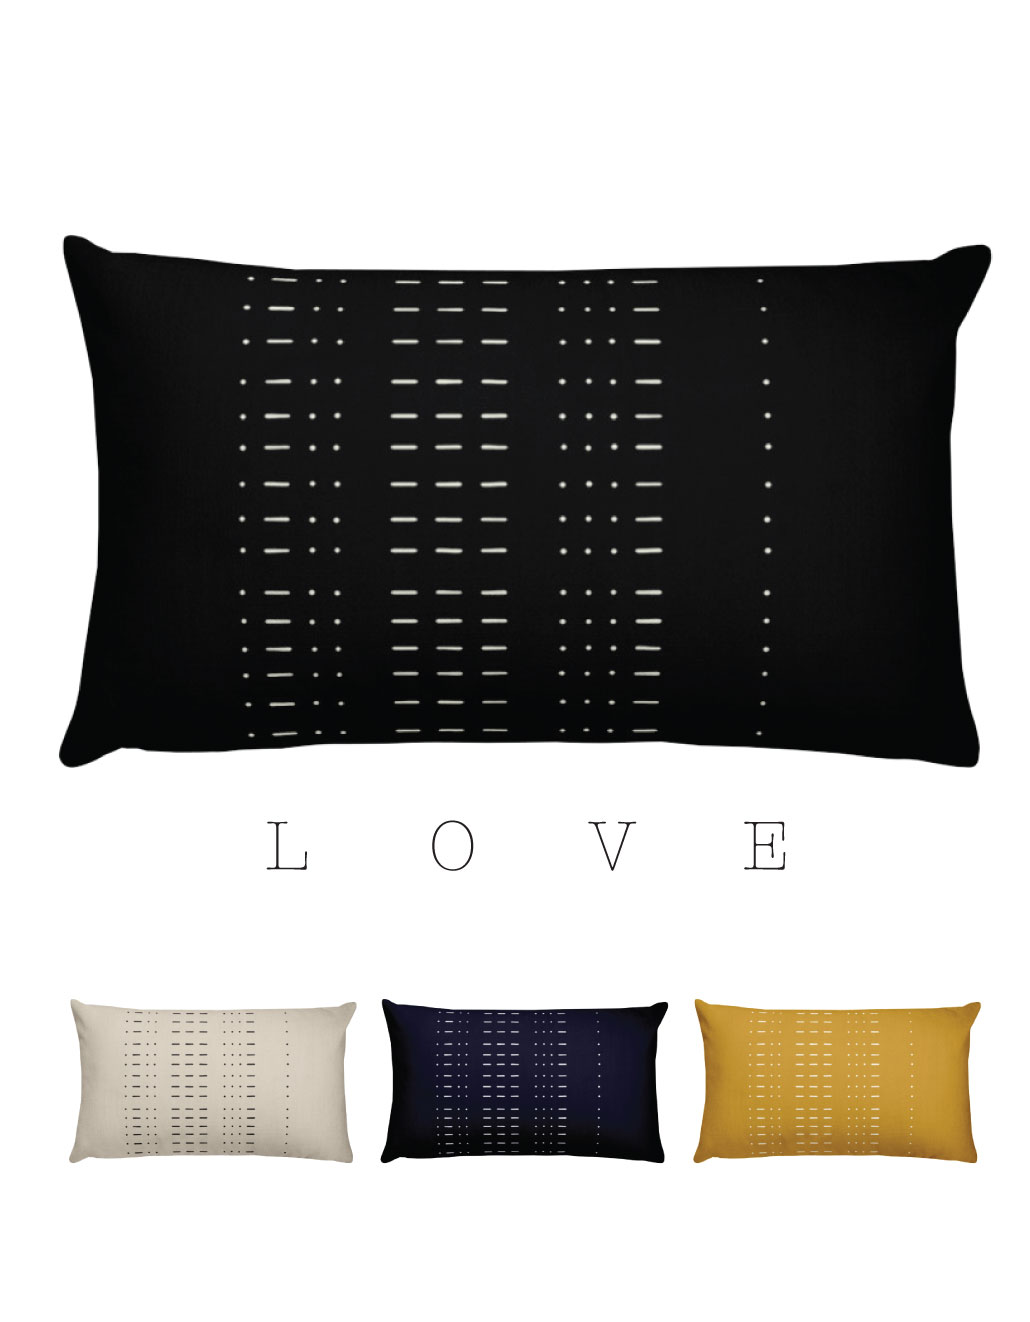 Coded Love – mustard morse code “LOVE” lumbar pillow